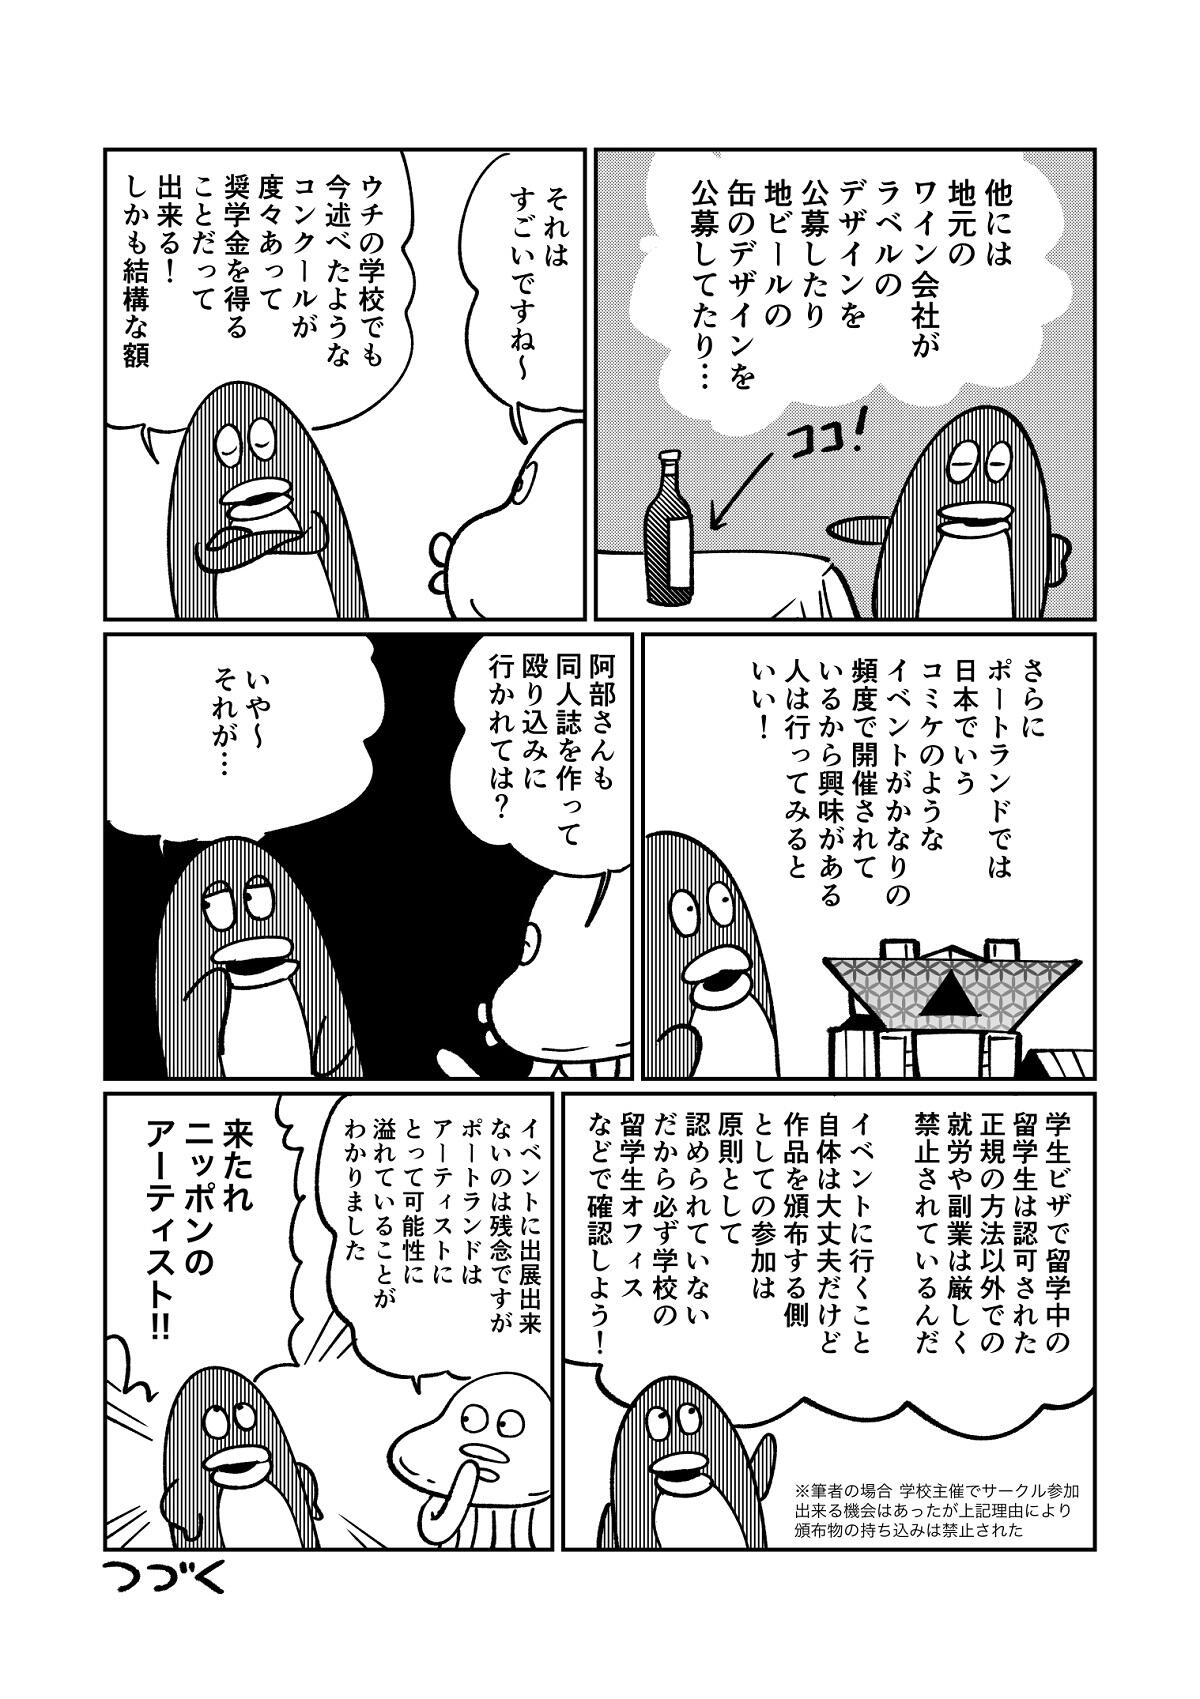 https://www.ryugaku.co.jp/column/images/jawamura12_6_1200.jpg